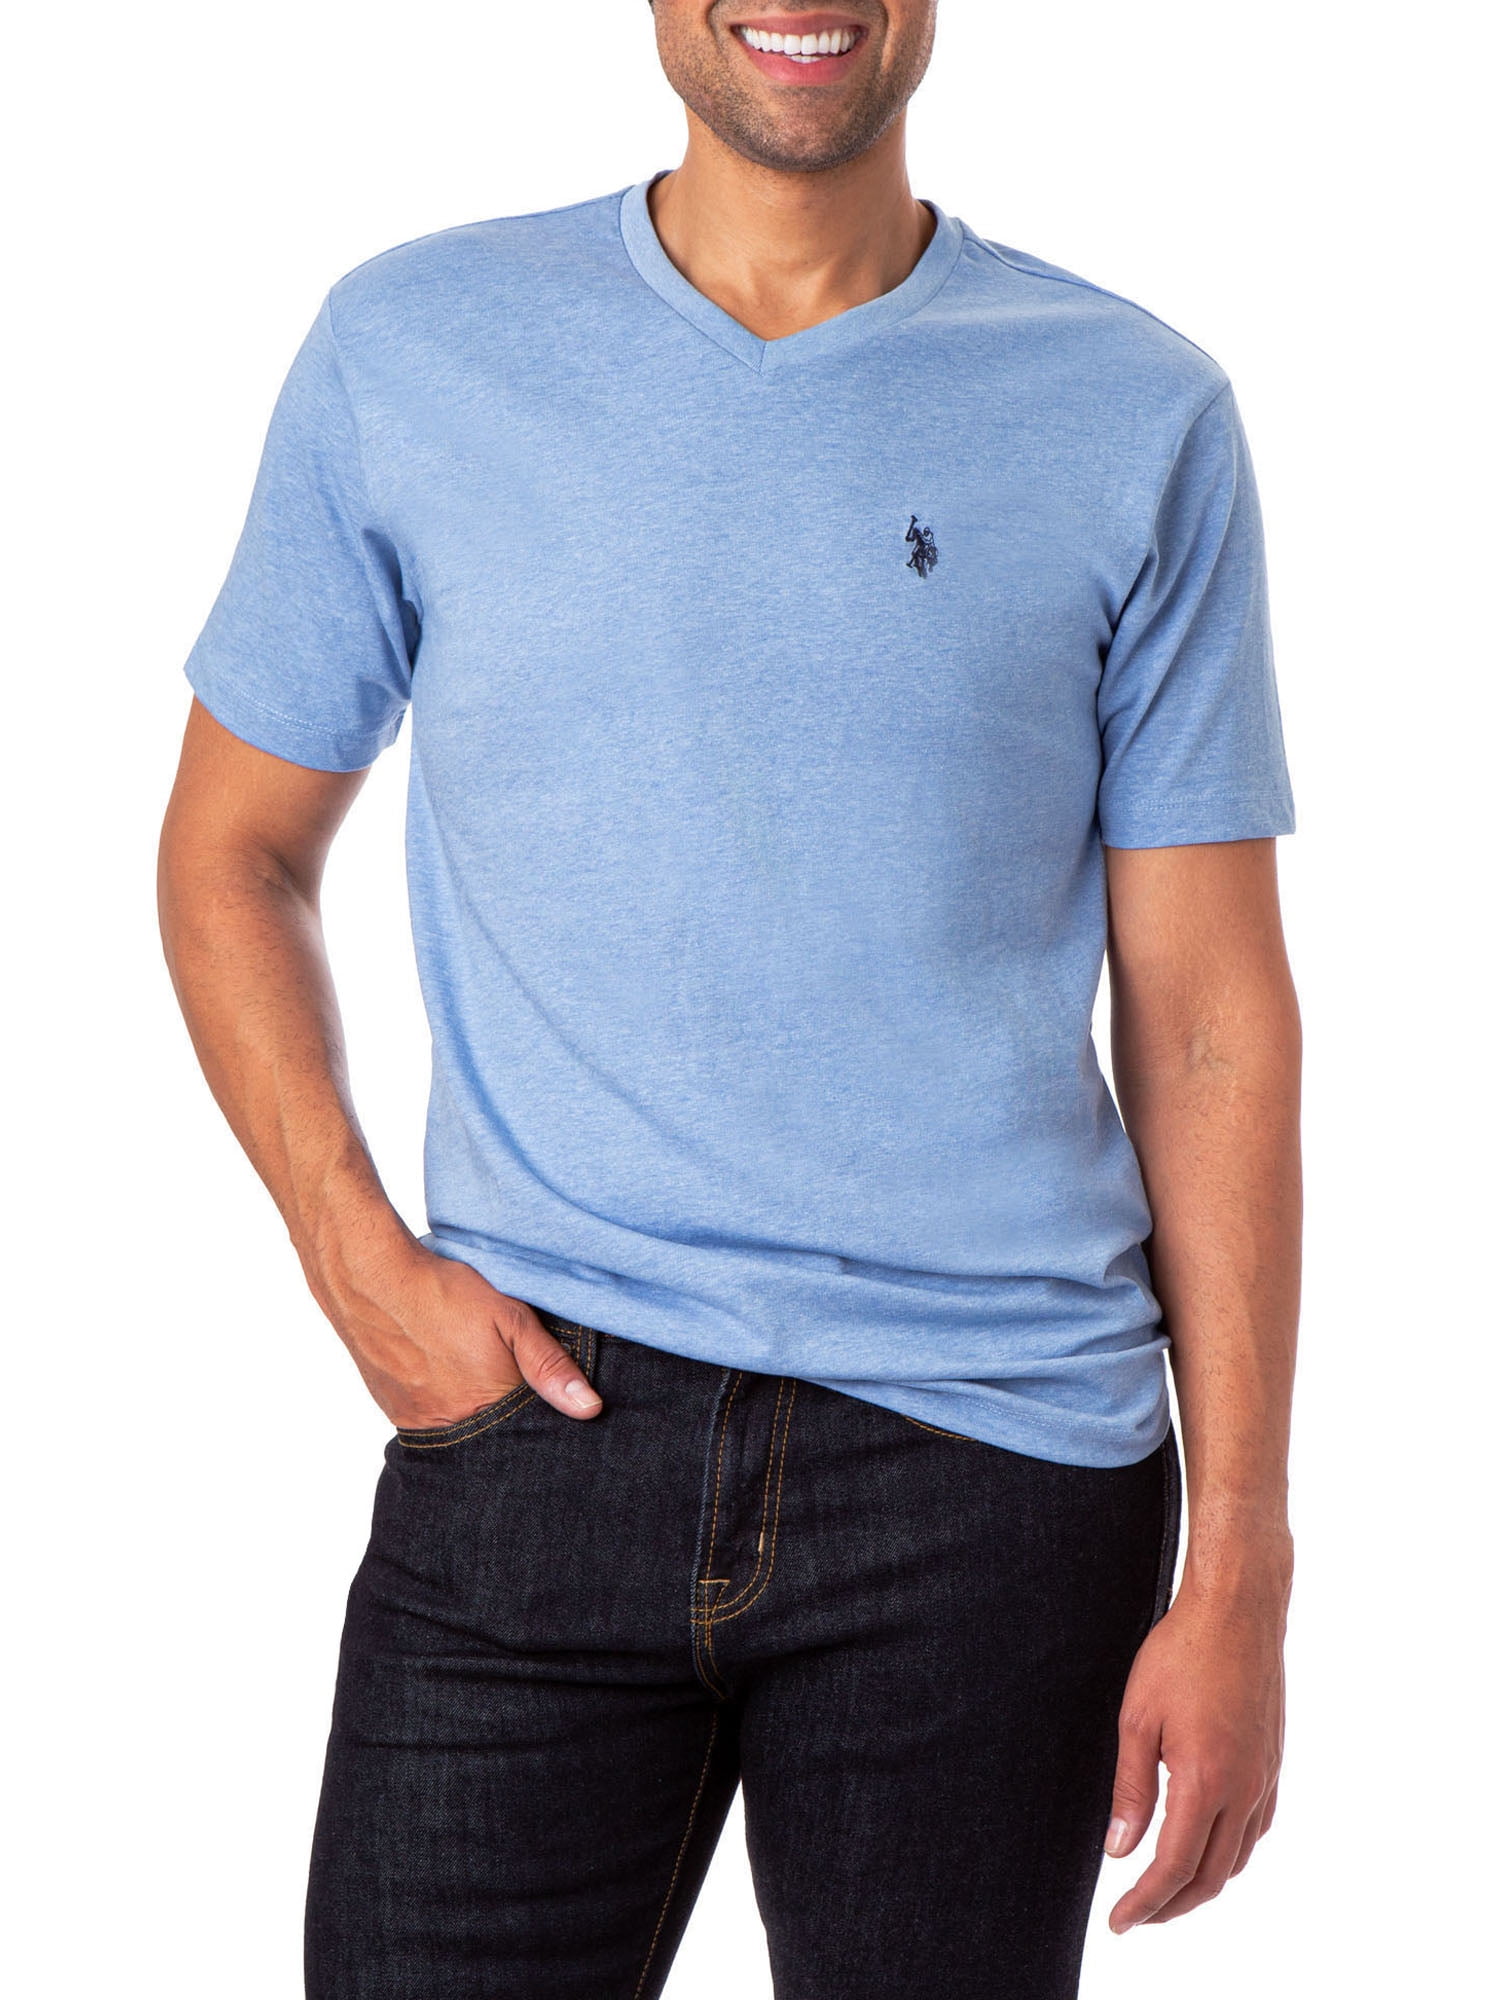 U.S. Polo Assn. Men's Short Sleeve V-Neck Tee - Walmart.com